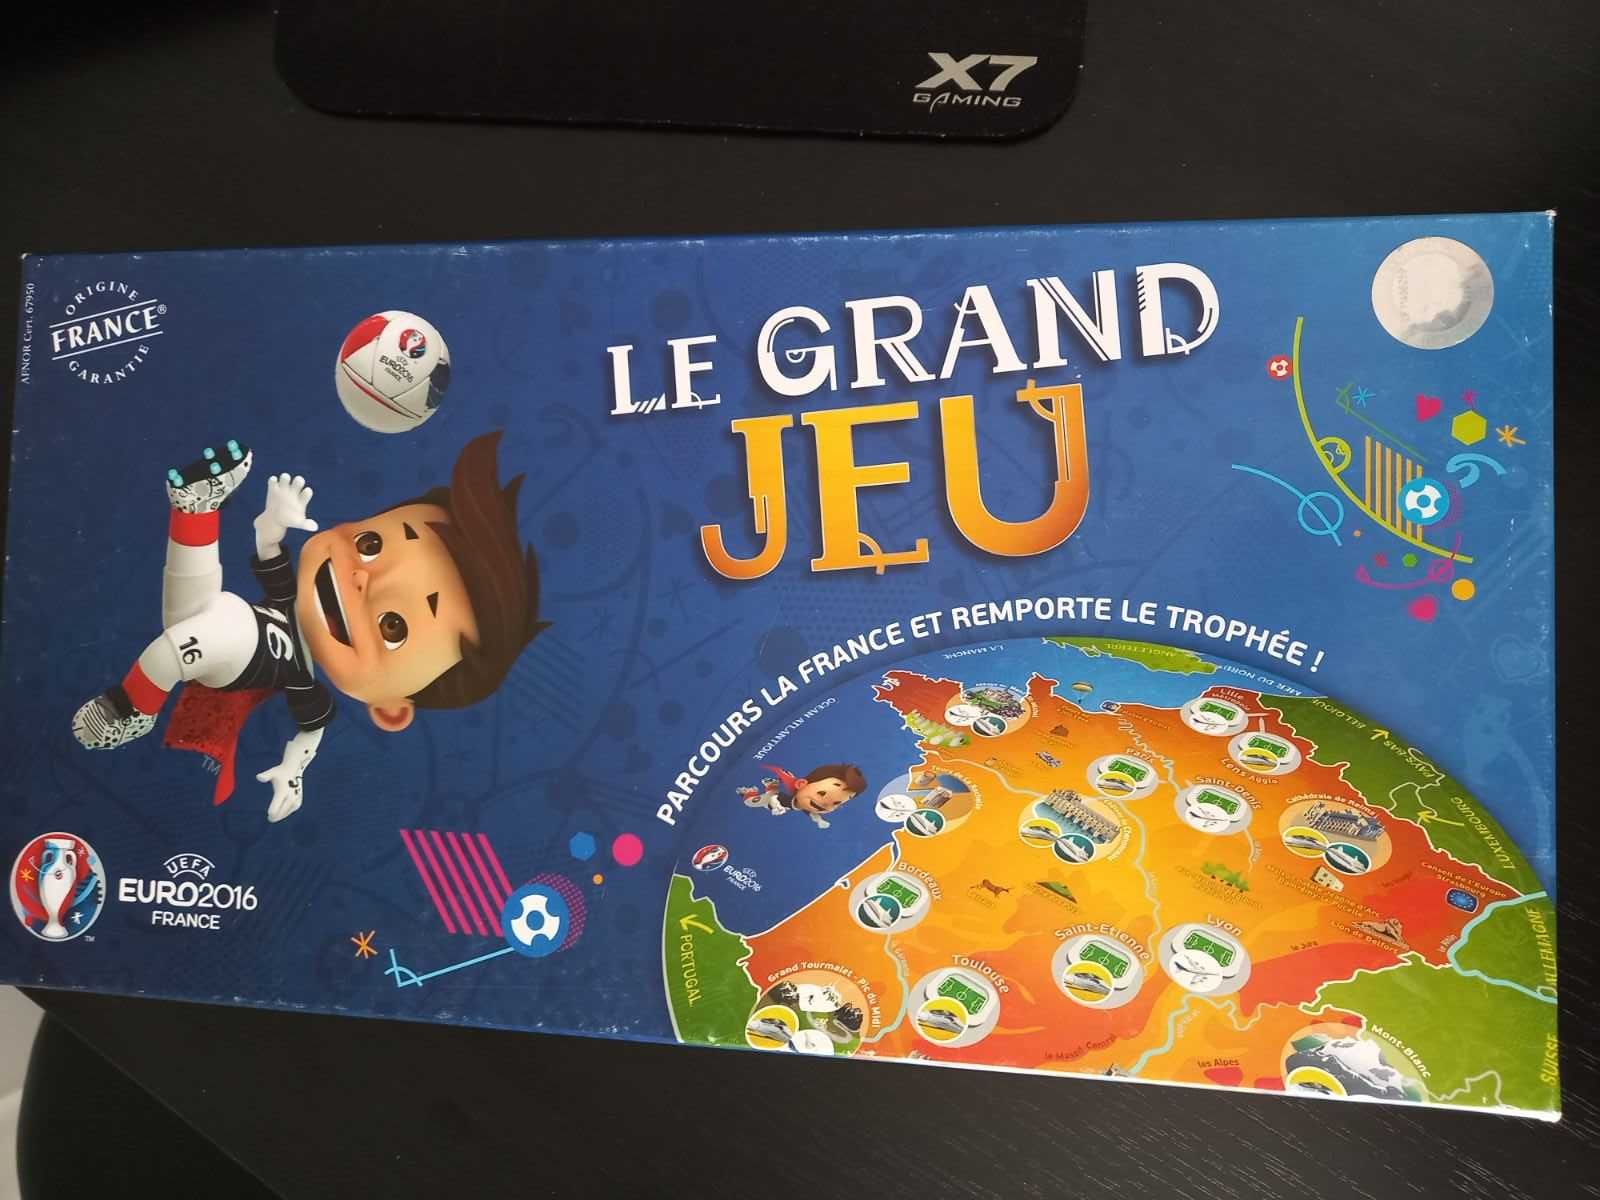 Гра Uefa Euro 2016 football Le grand jeu на французькій відкрите